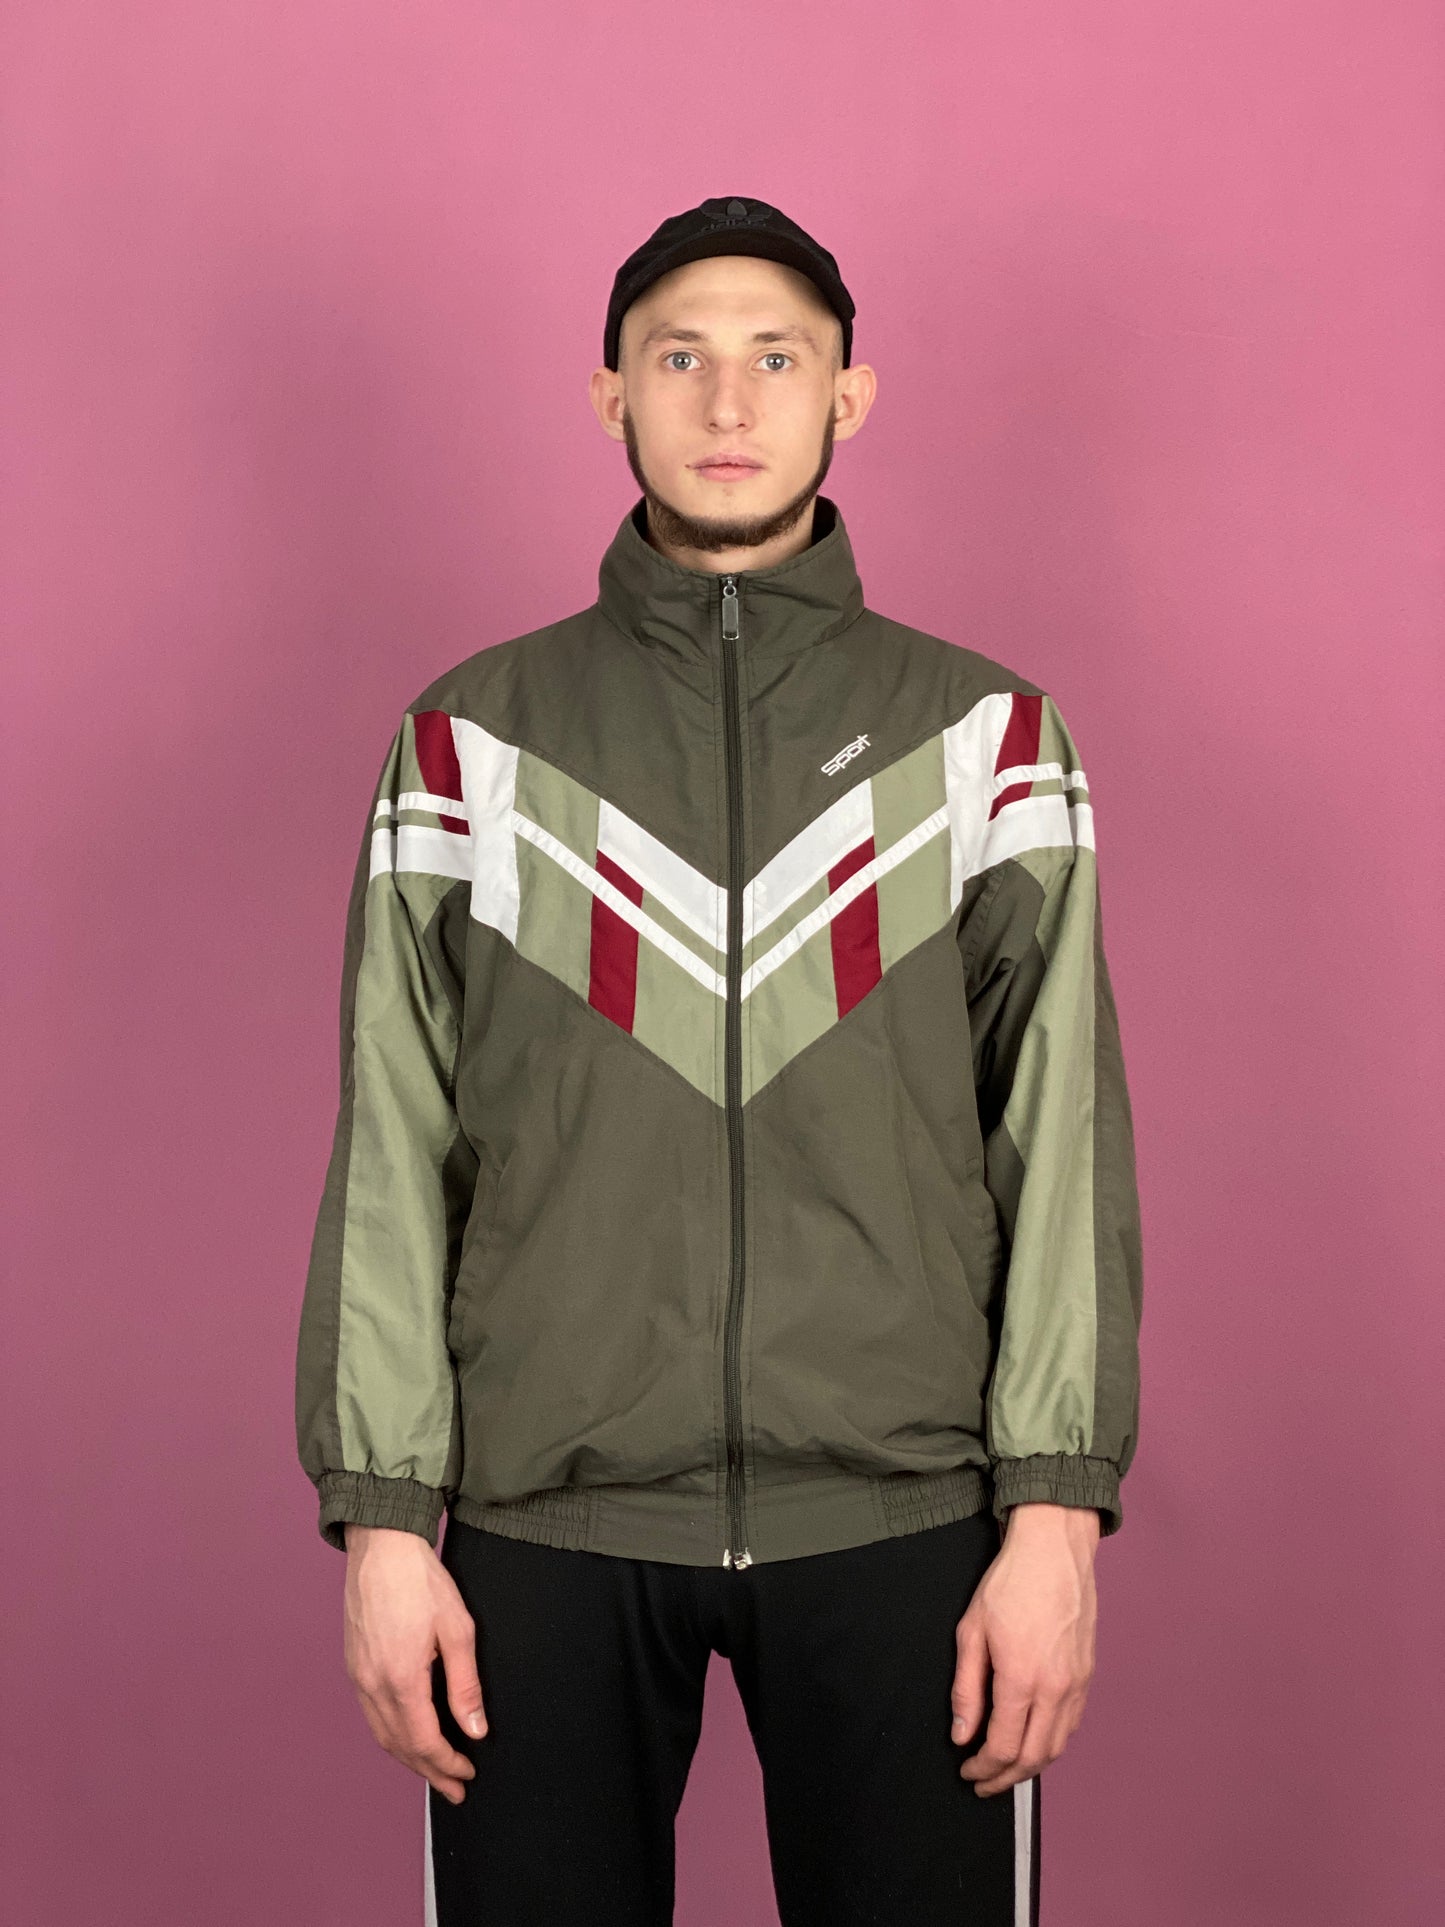 90s Vintage Men's Windbreaker Jacket - Medium Green Cotton Blend